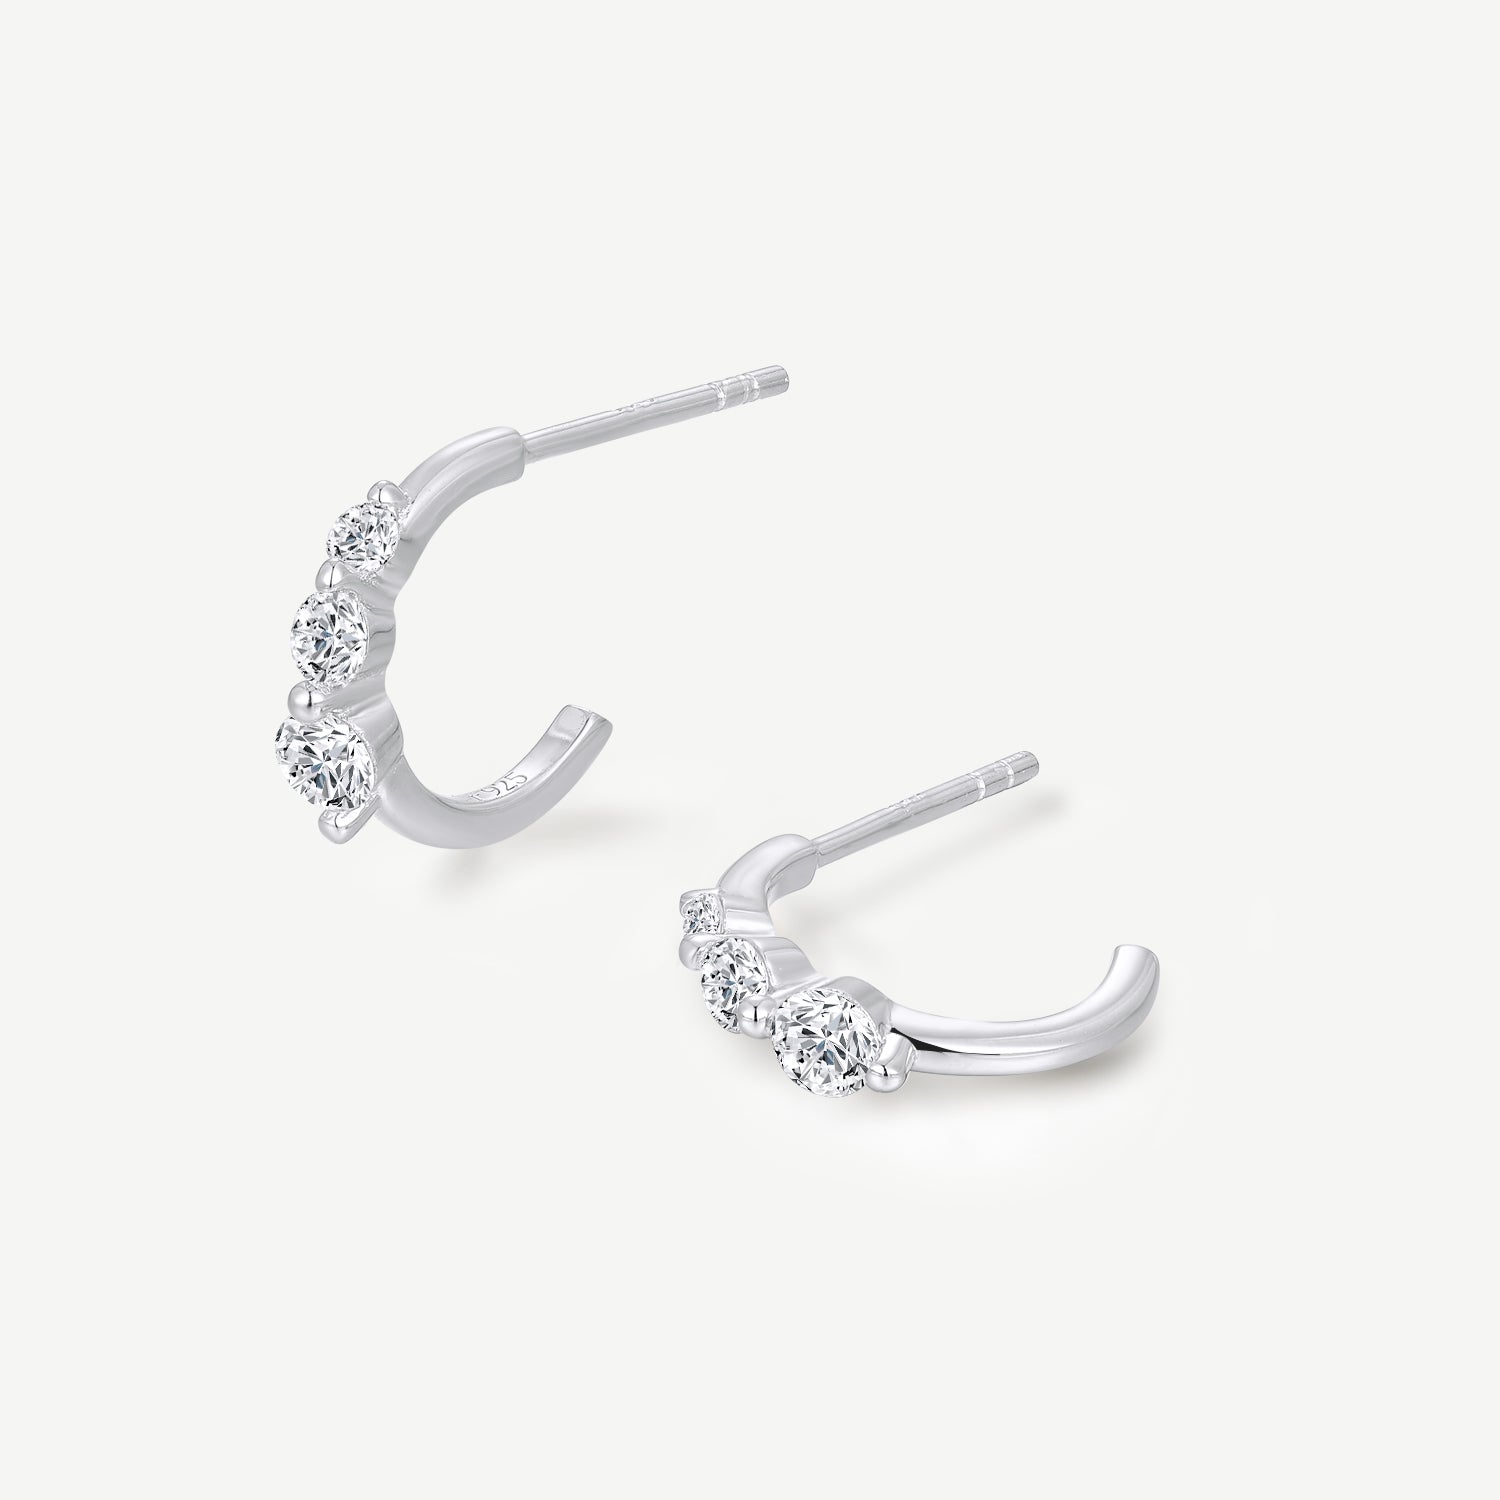 Sylvan Sparkle Silver Earrings